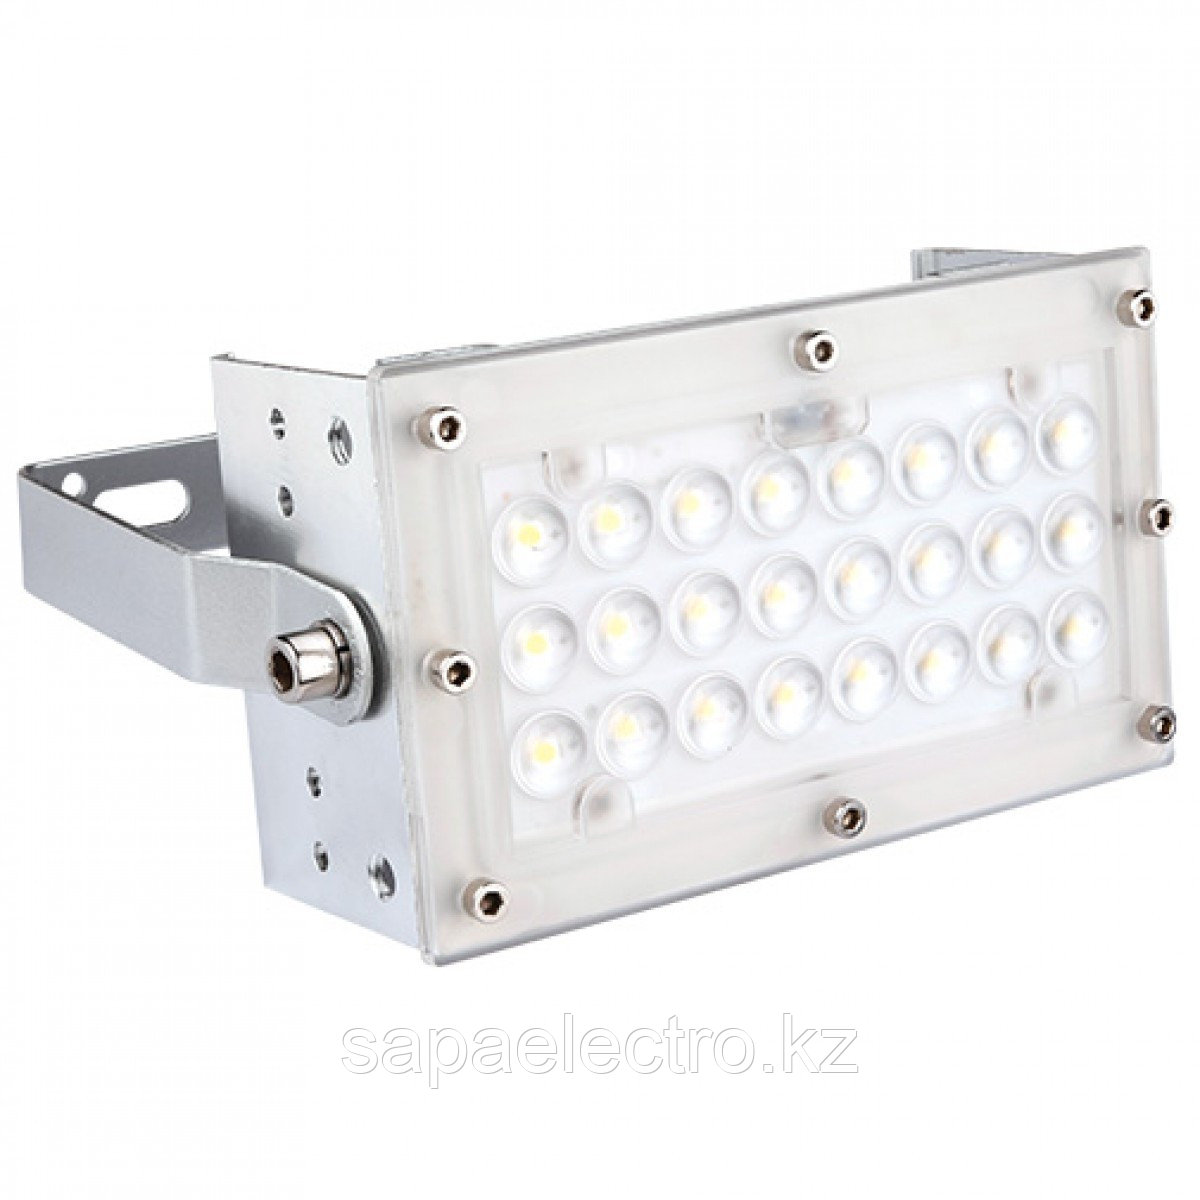 Прожектор LED MFL25 25W 5700K IP67 (TS)20шт